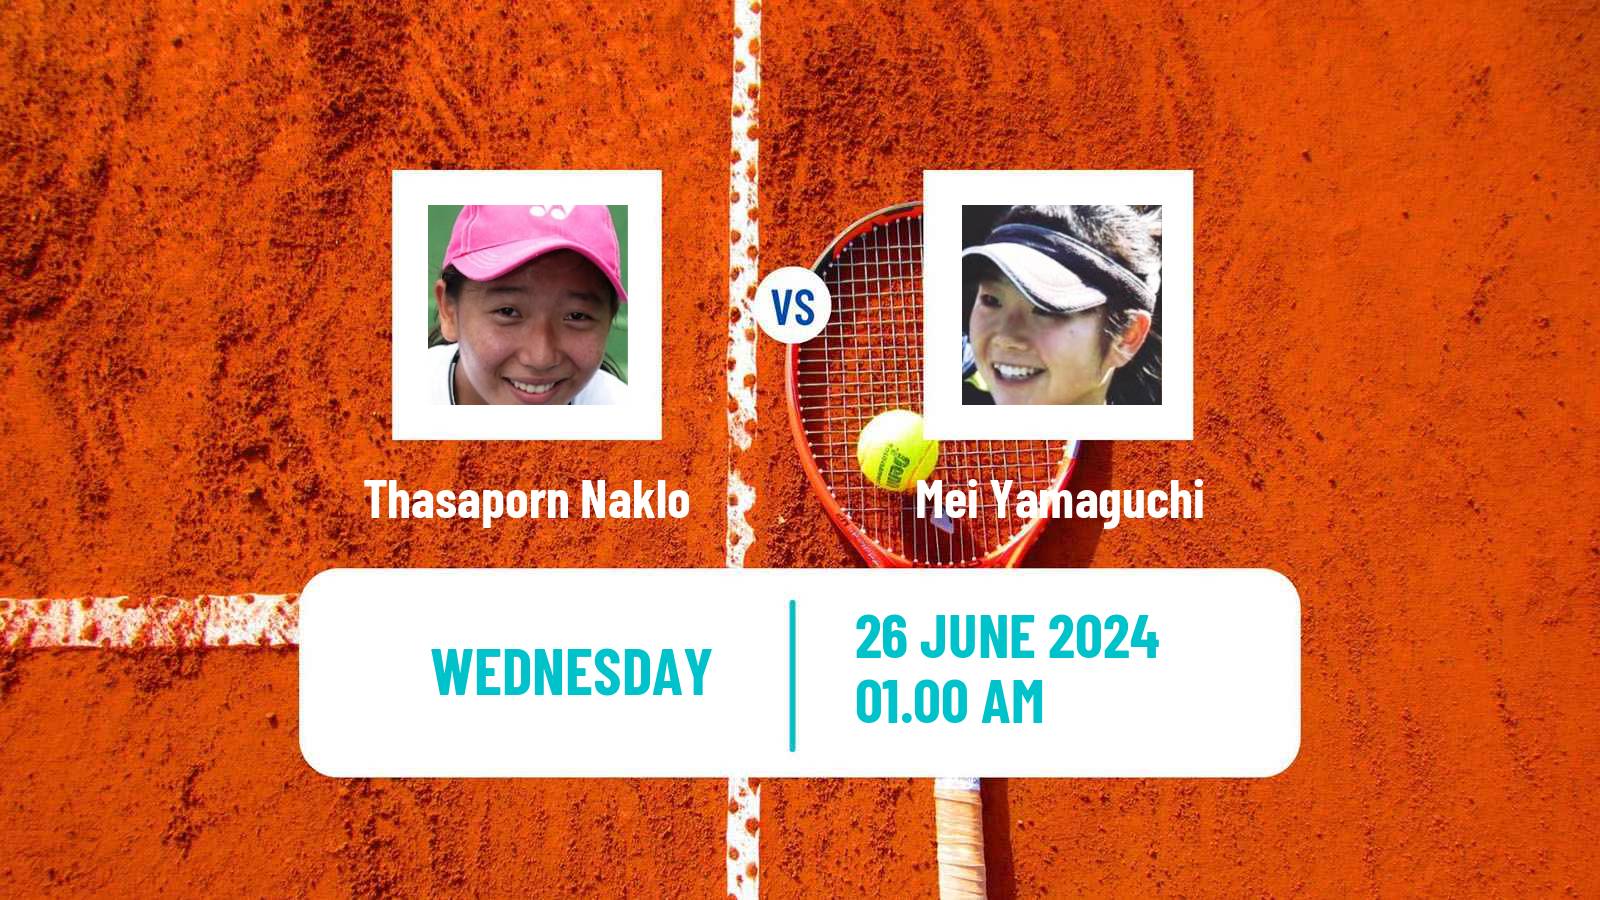 Tennis ITF W35 Taipei 2 Women Thasaporn Naklo - Mei Yamaguchi